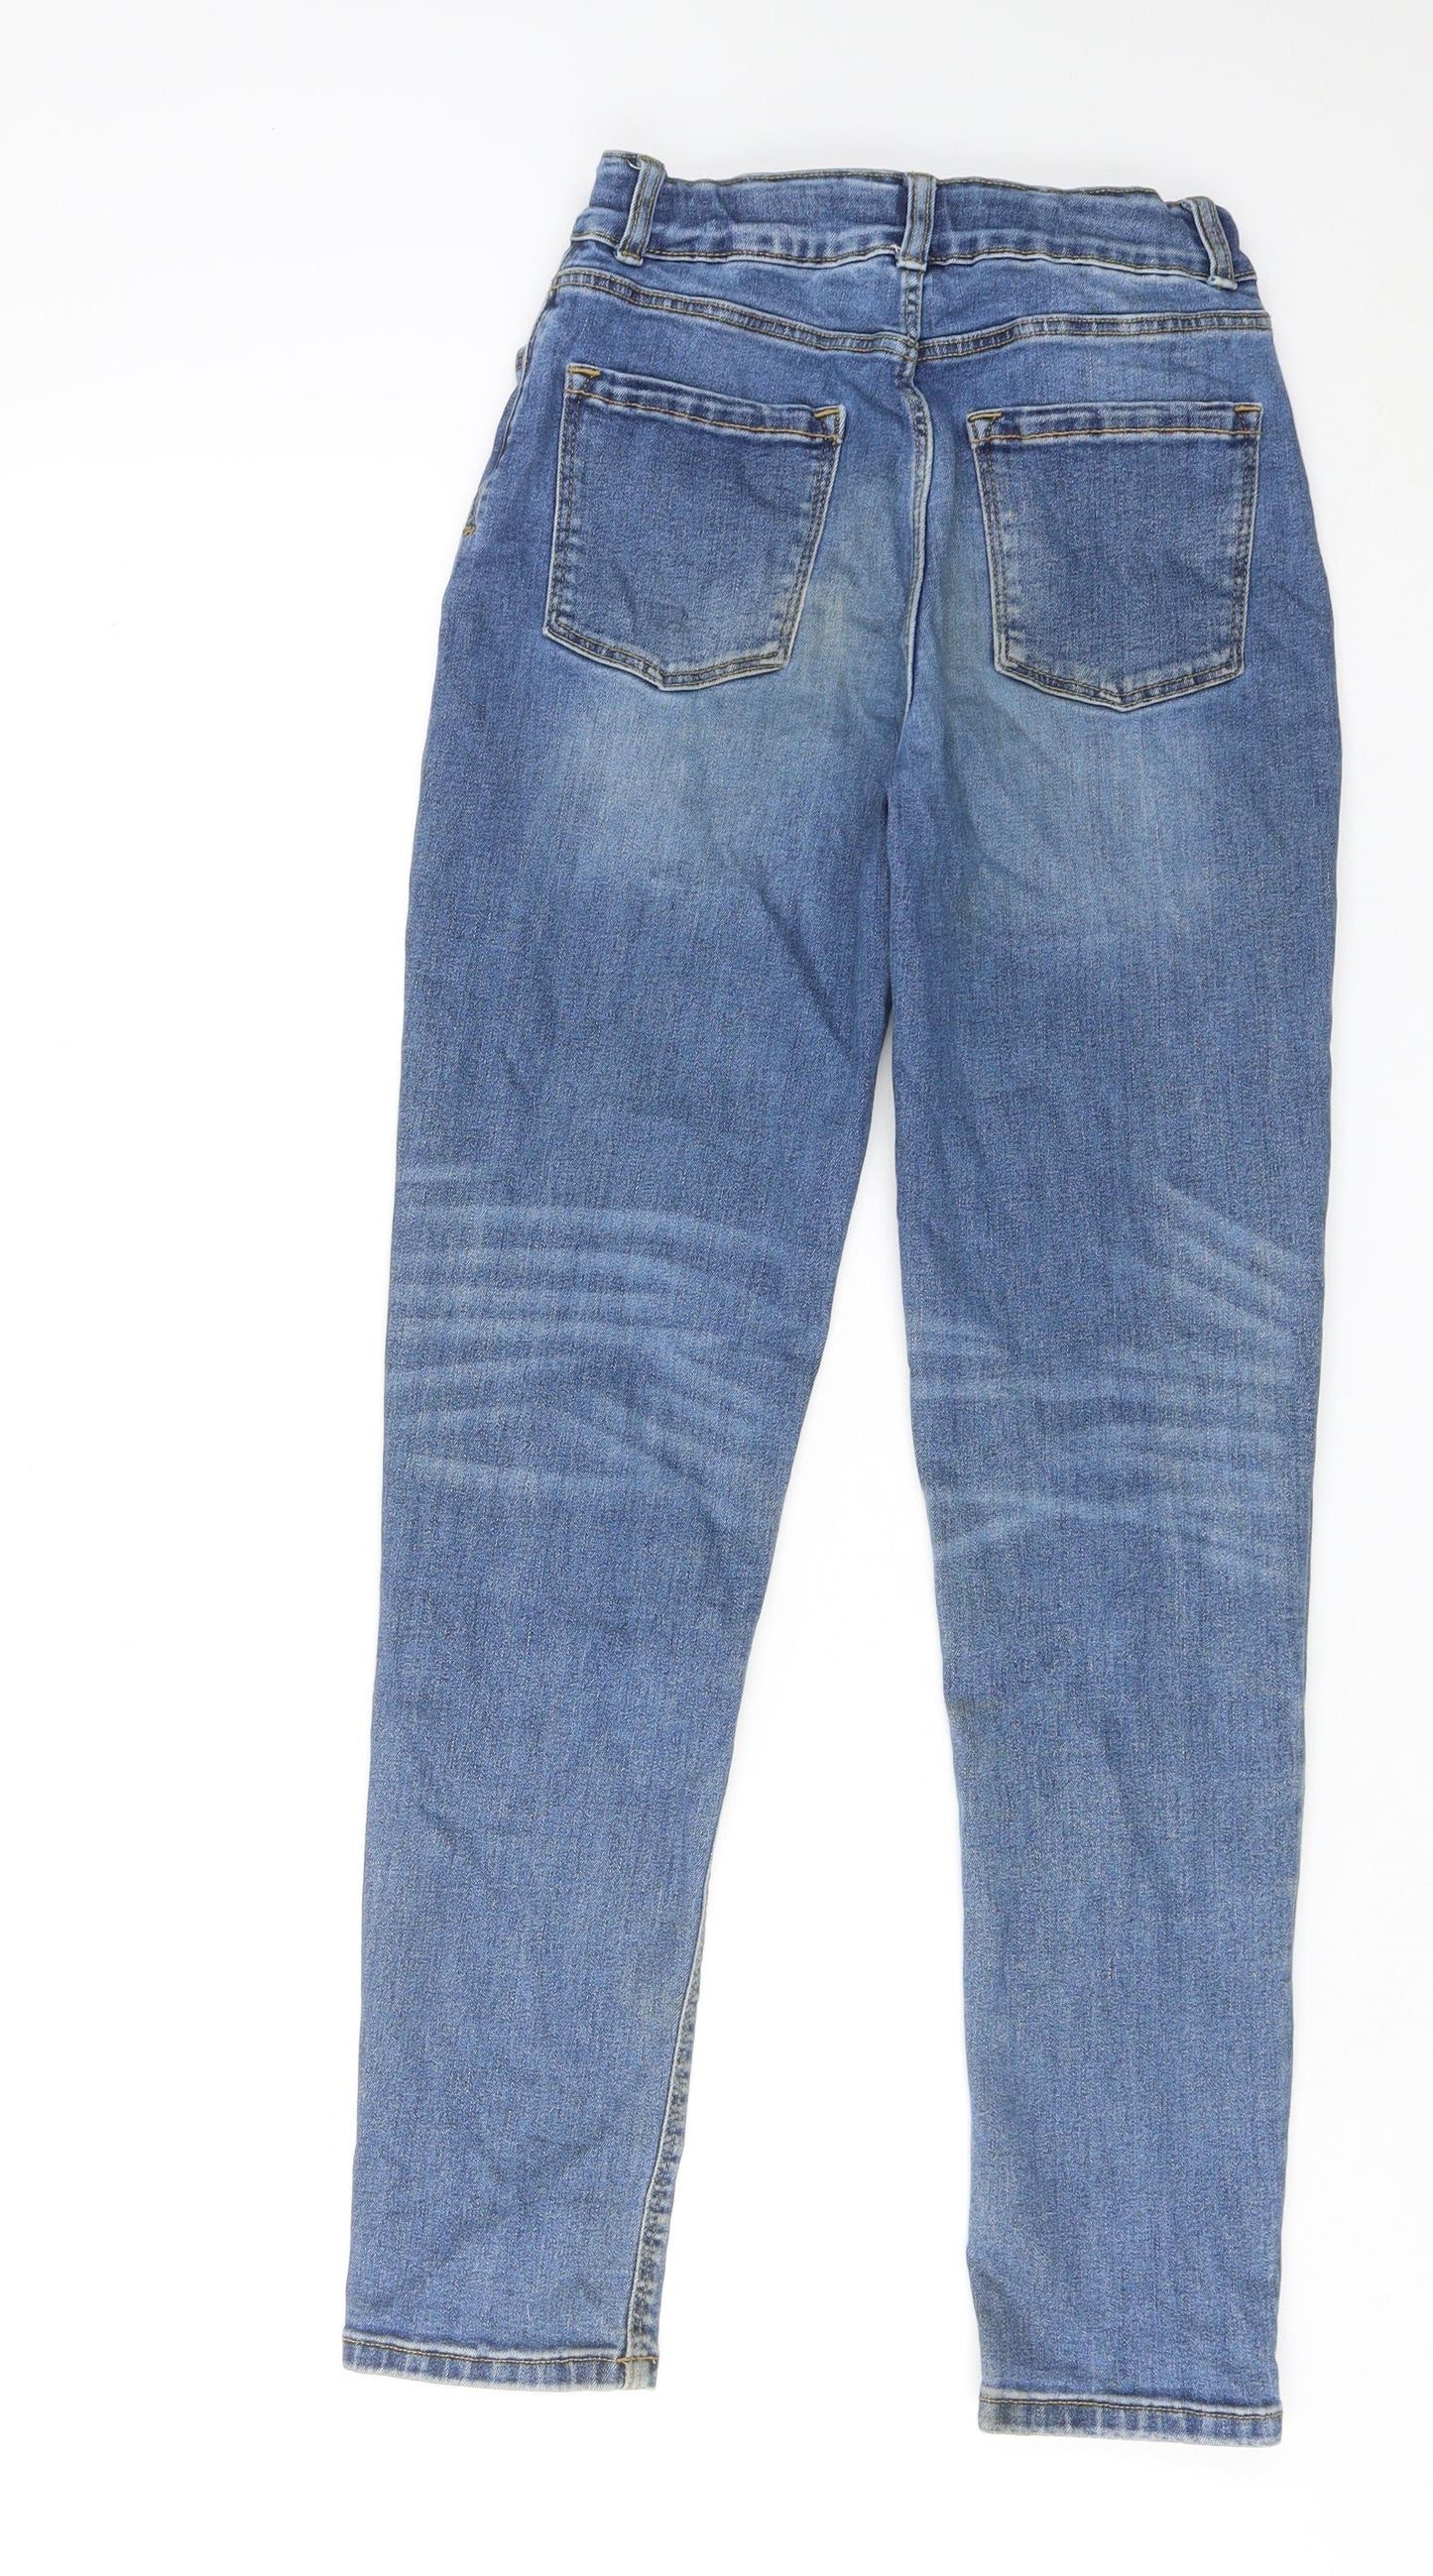 Boden Boys Blue Cotton Skinny Jeans Size 14 Years Regular Zip